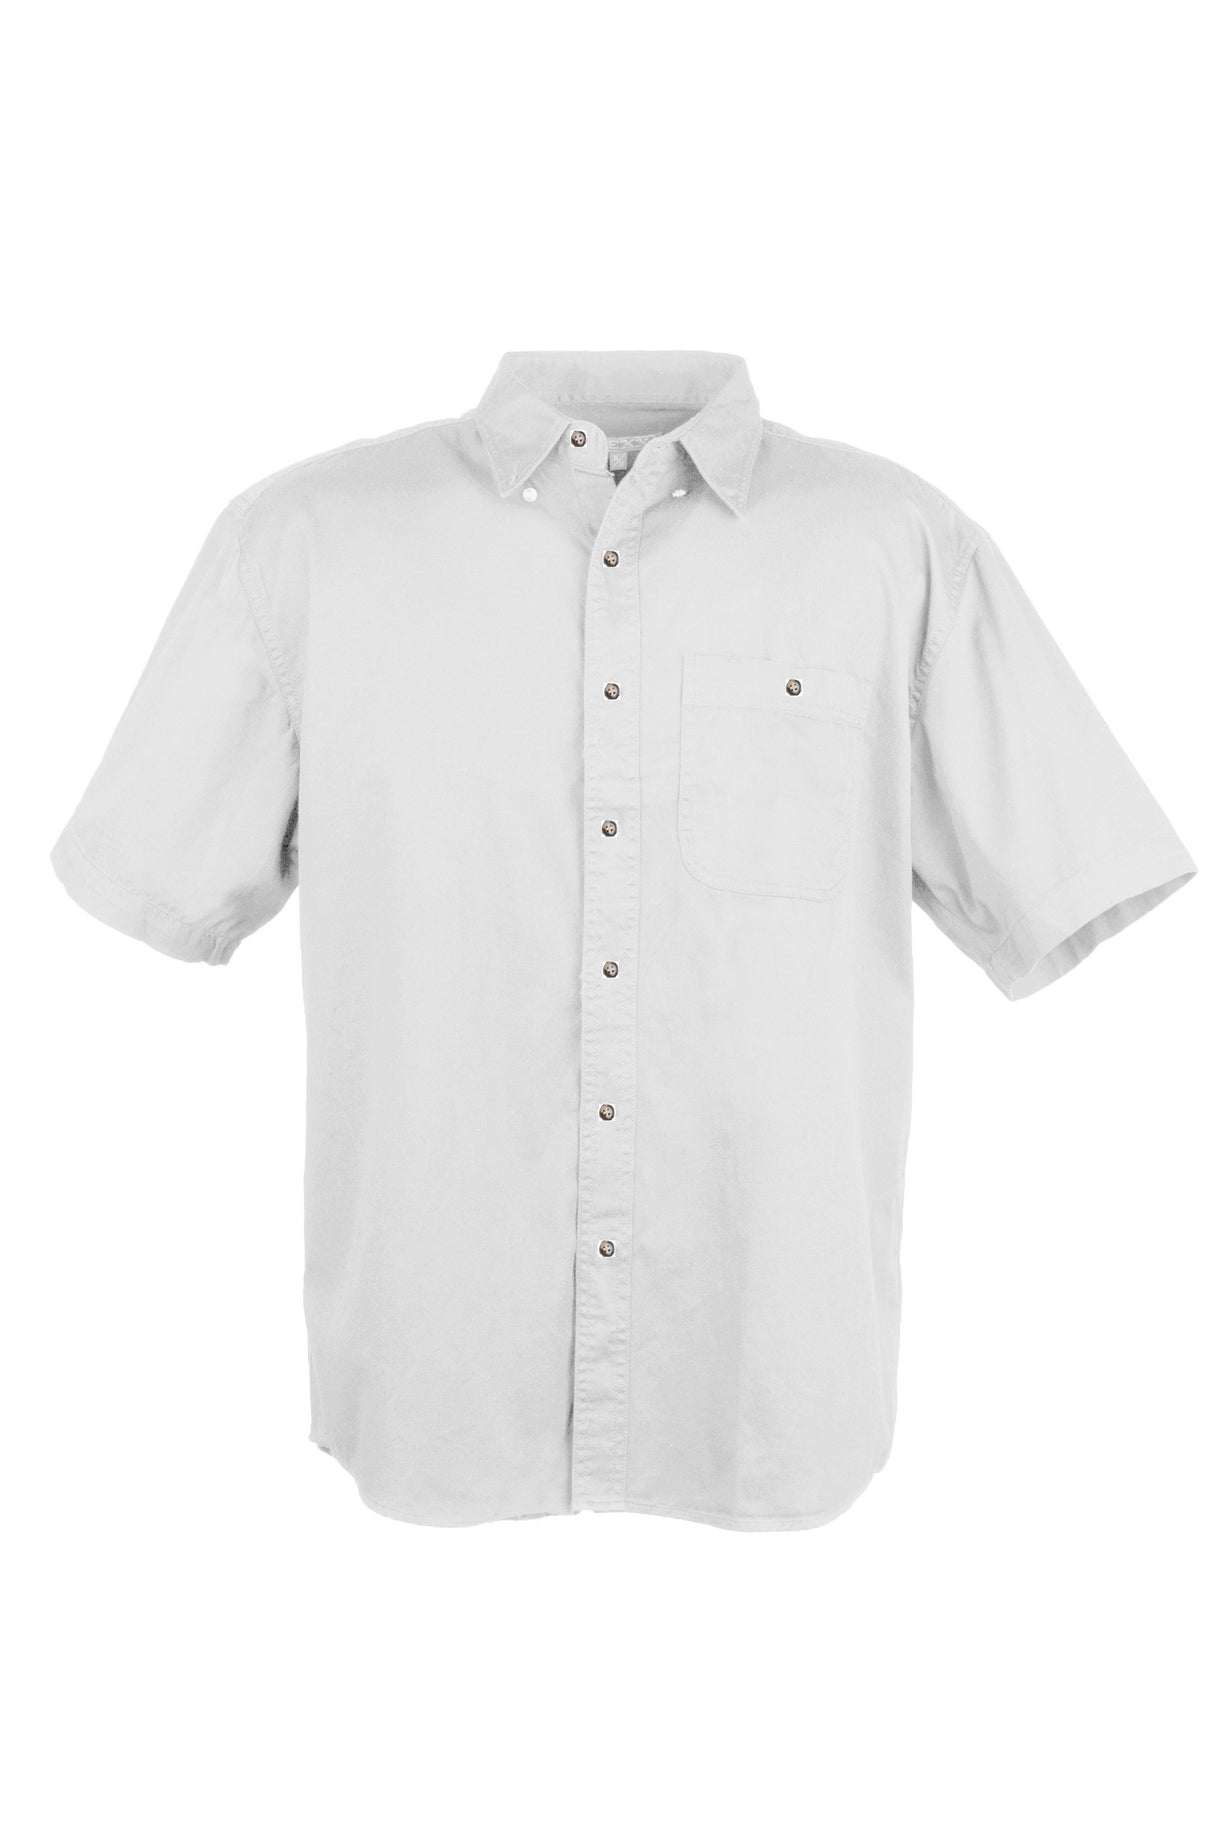 Men's 100% Cotton Twill Short Sleeve Shirt Tall (White) (LT-3XLT)